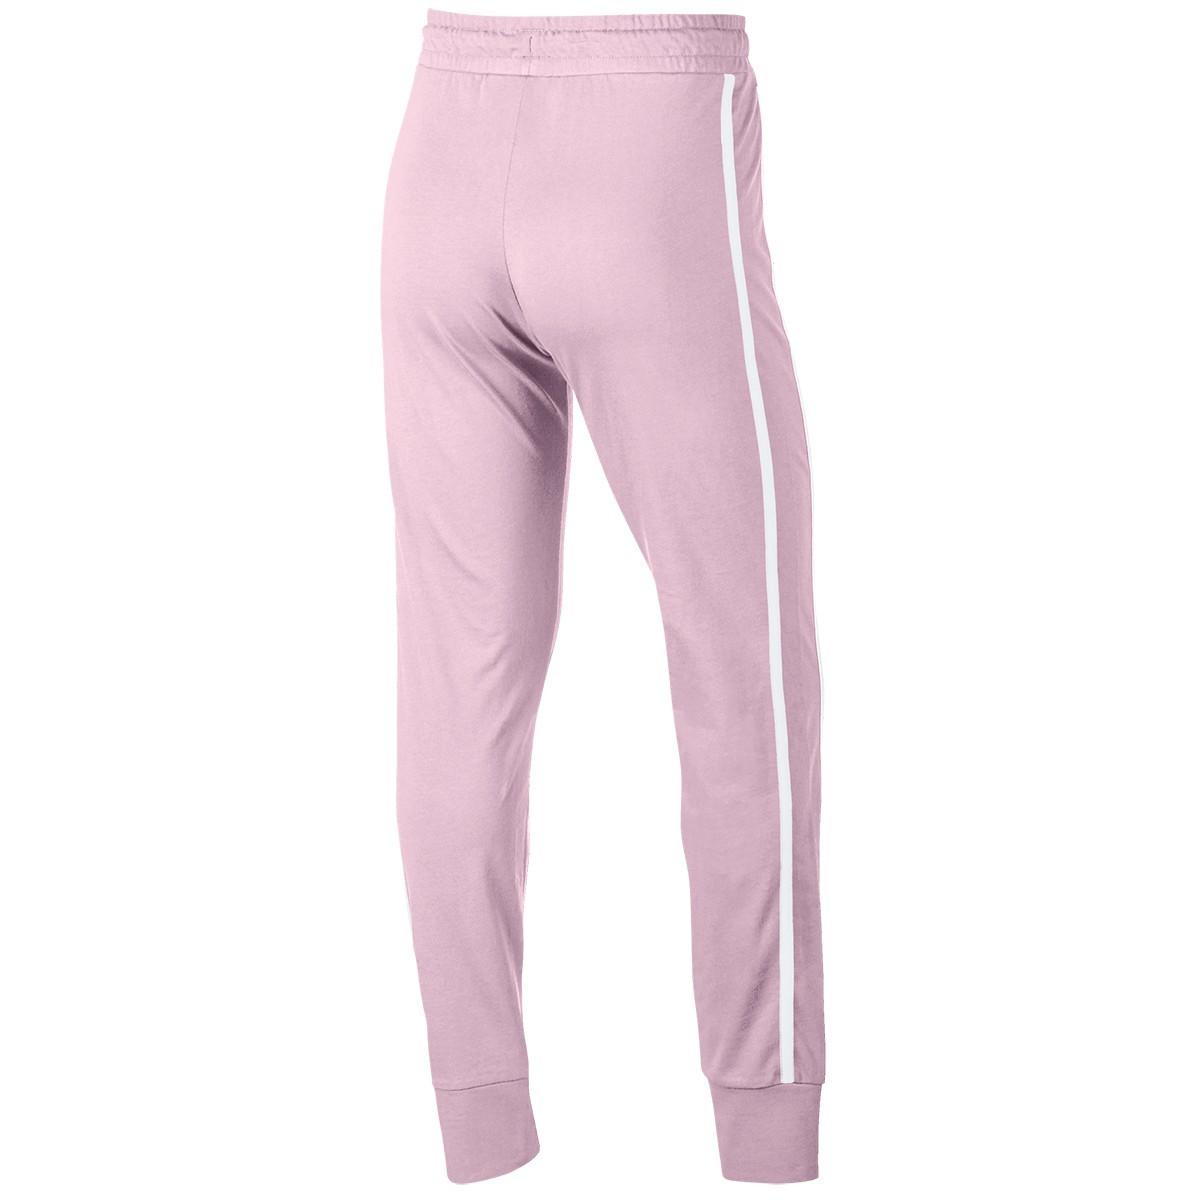 Штаны детские Nike Sportswear Girl's Pants pink/white